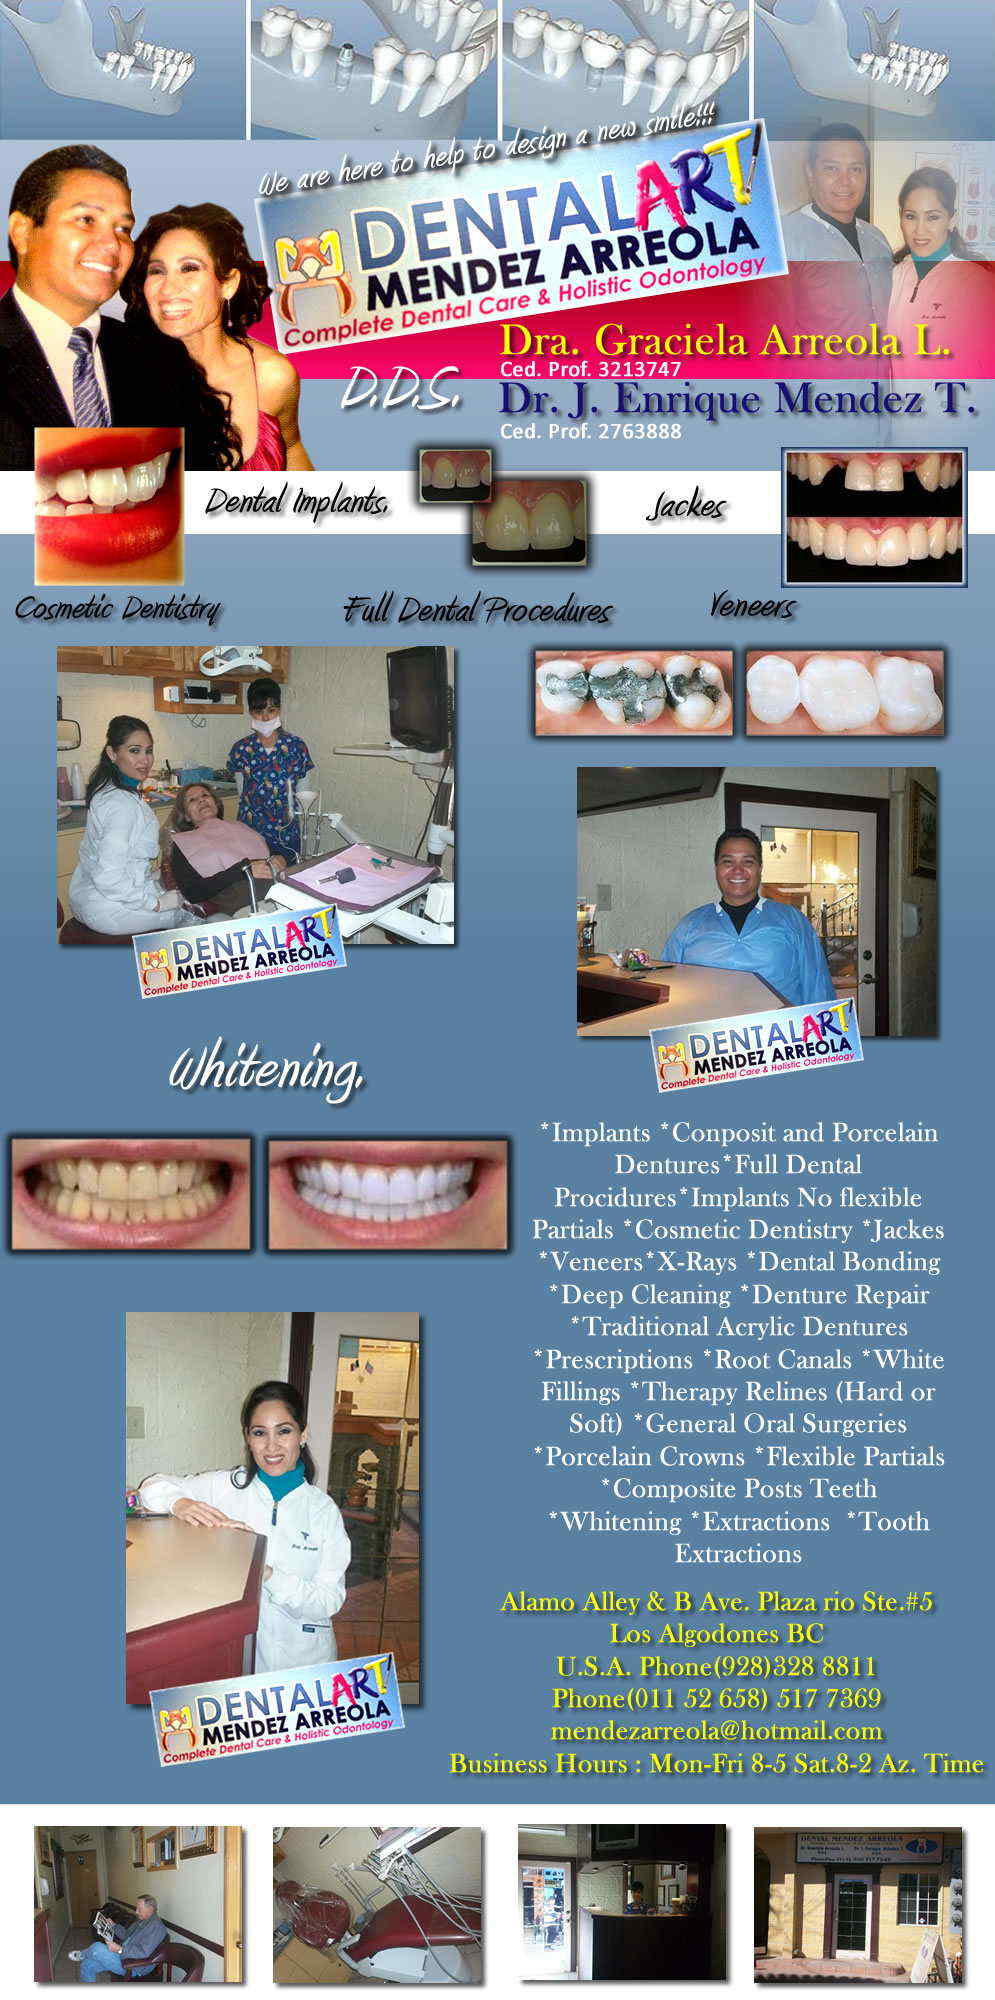 DENTAL ART MENDEZ ARREOLA in Algodones  in Algodones  Complete Dental Care & Holistec Odontology dental art mendez arreola complete dental care & holistic odontology